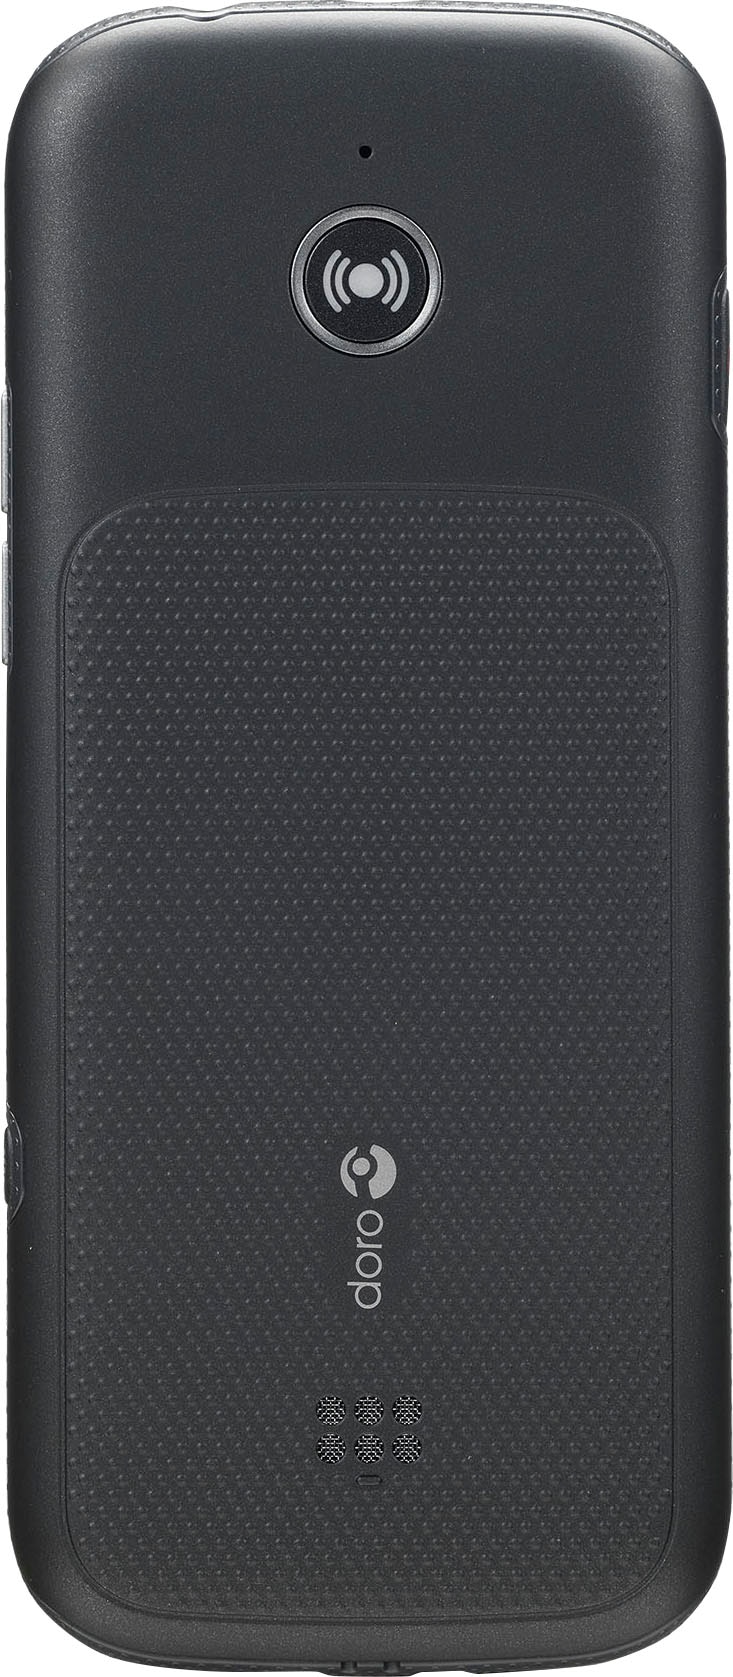 Doro Smartphone »780X IUP«, schwarz/weiß, 7,11 cm/2,8 Zoll, 4 GB Speicherplatz